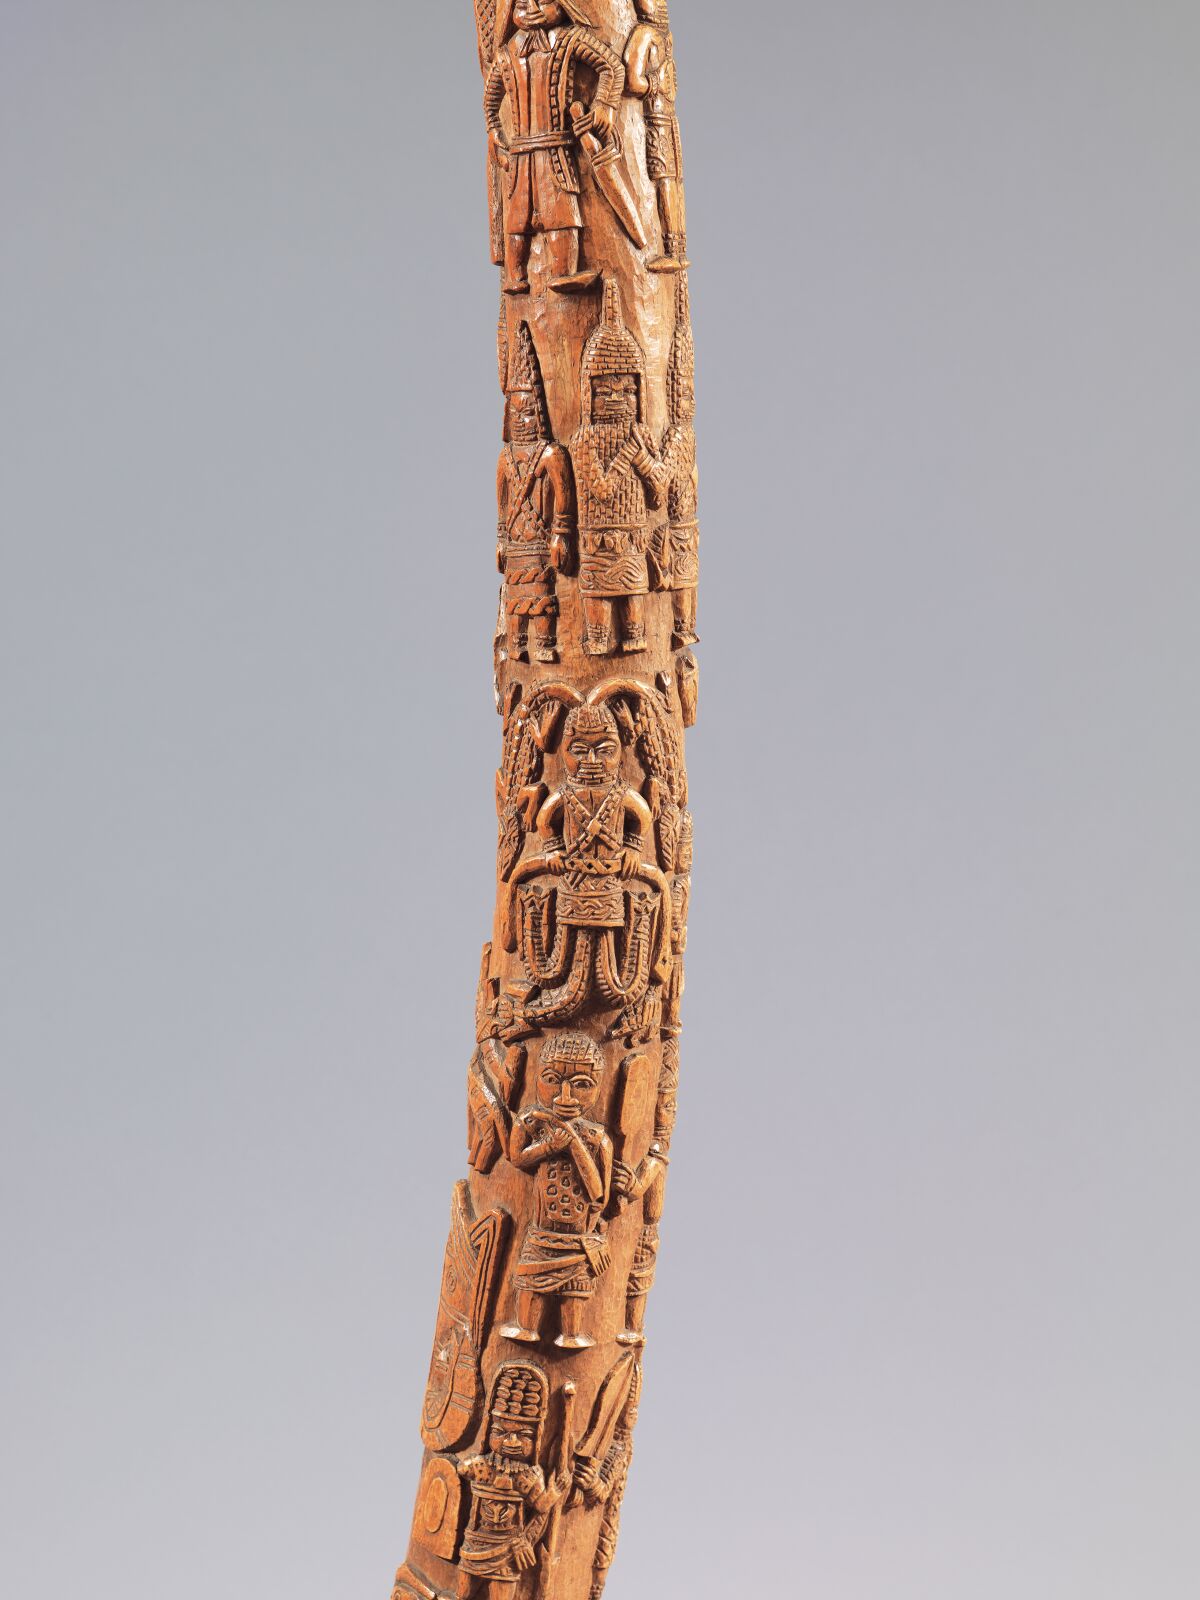 A closeup of intricate figurative interlace adorning a tusk